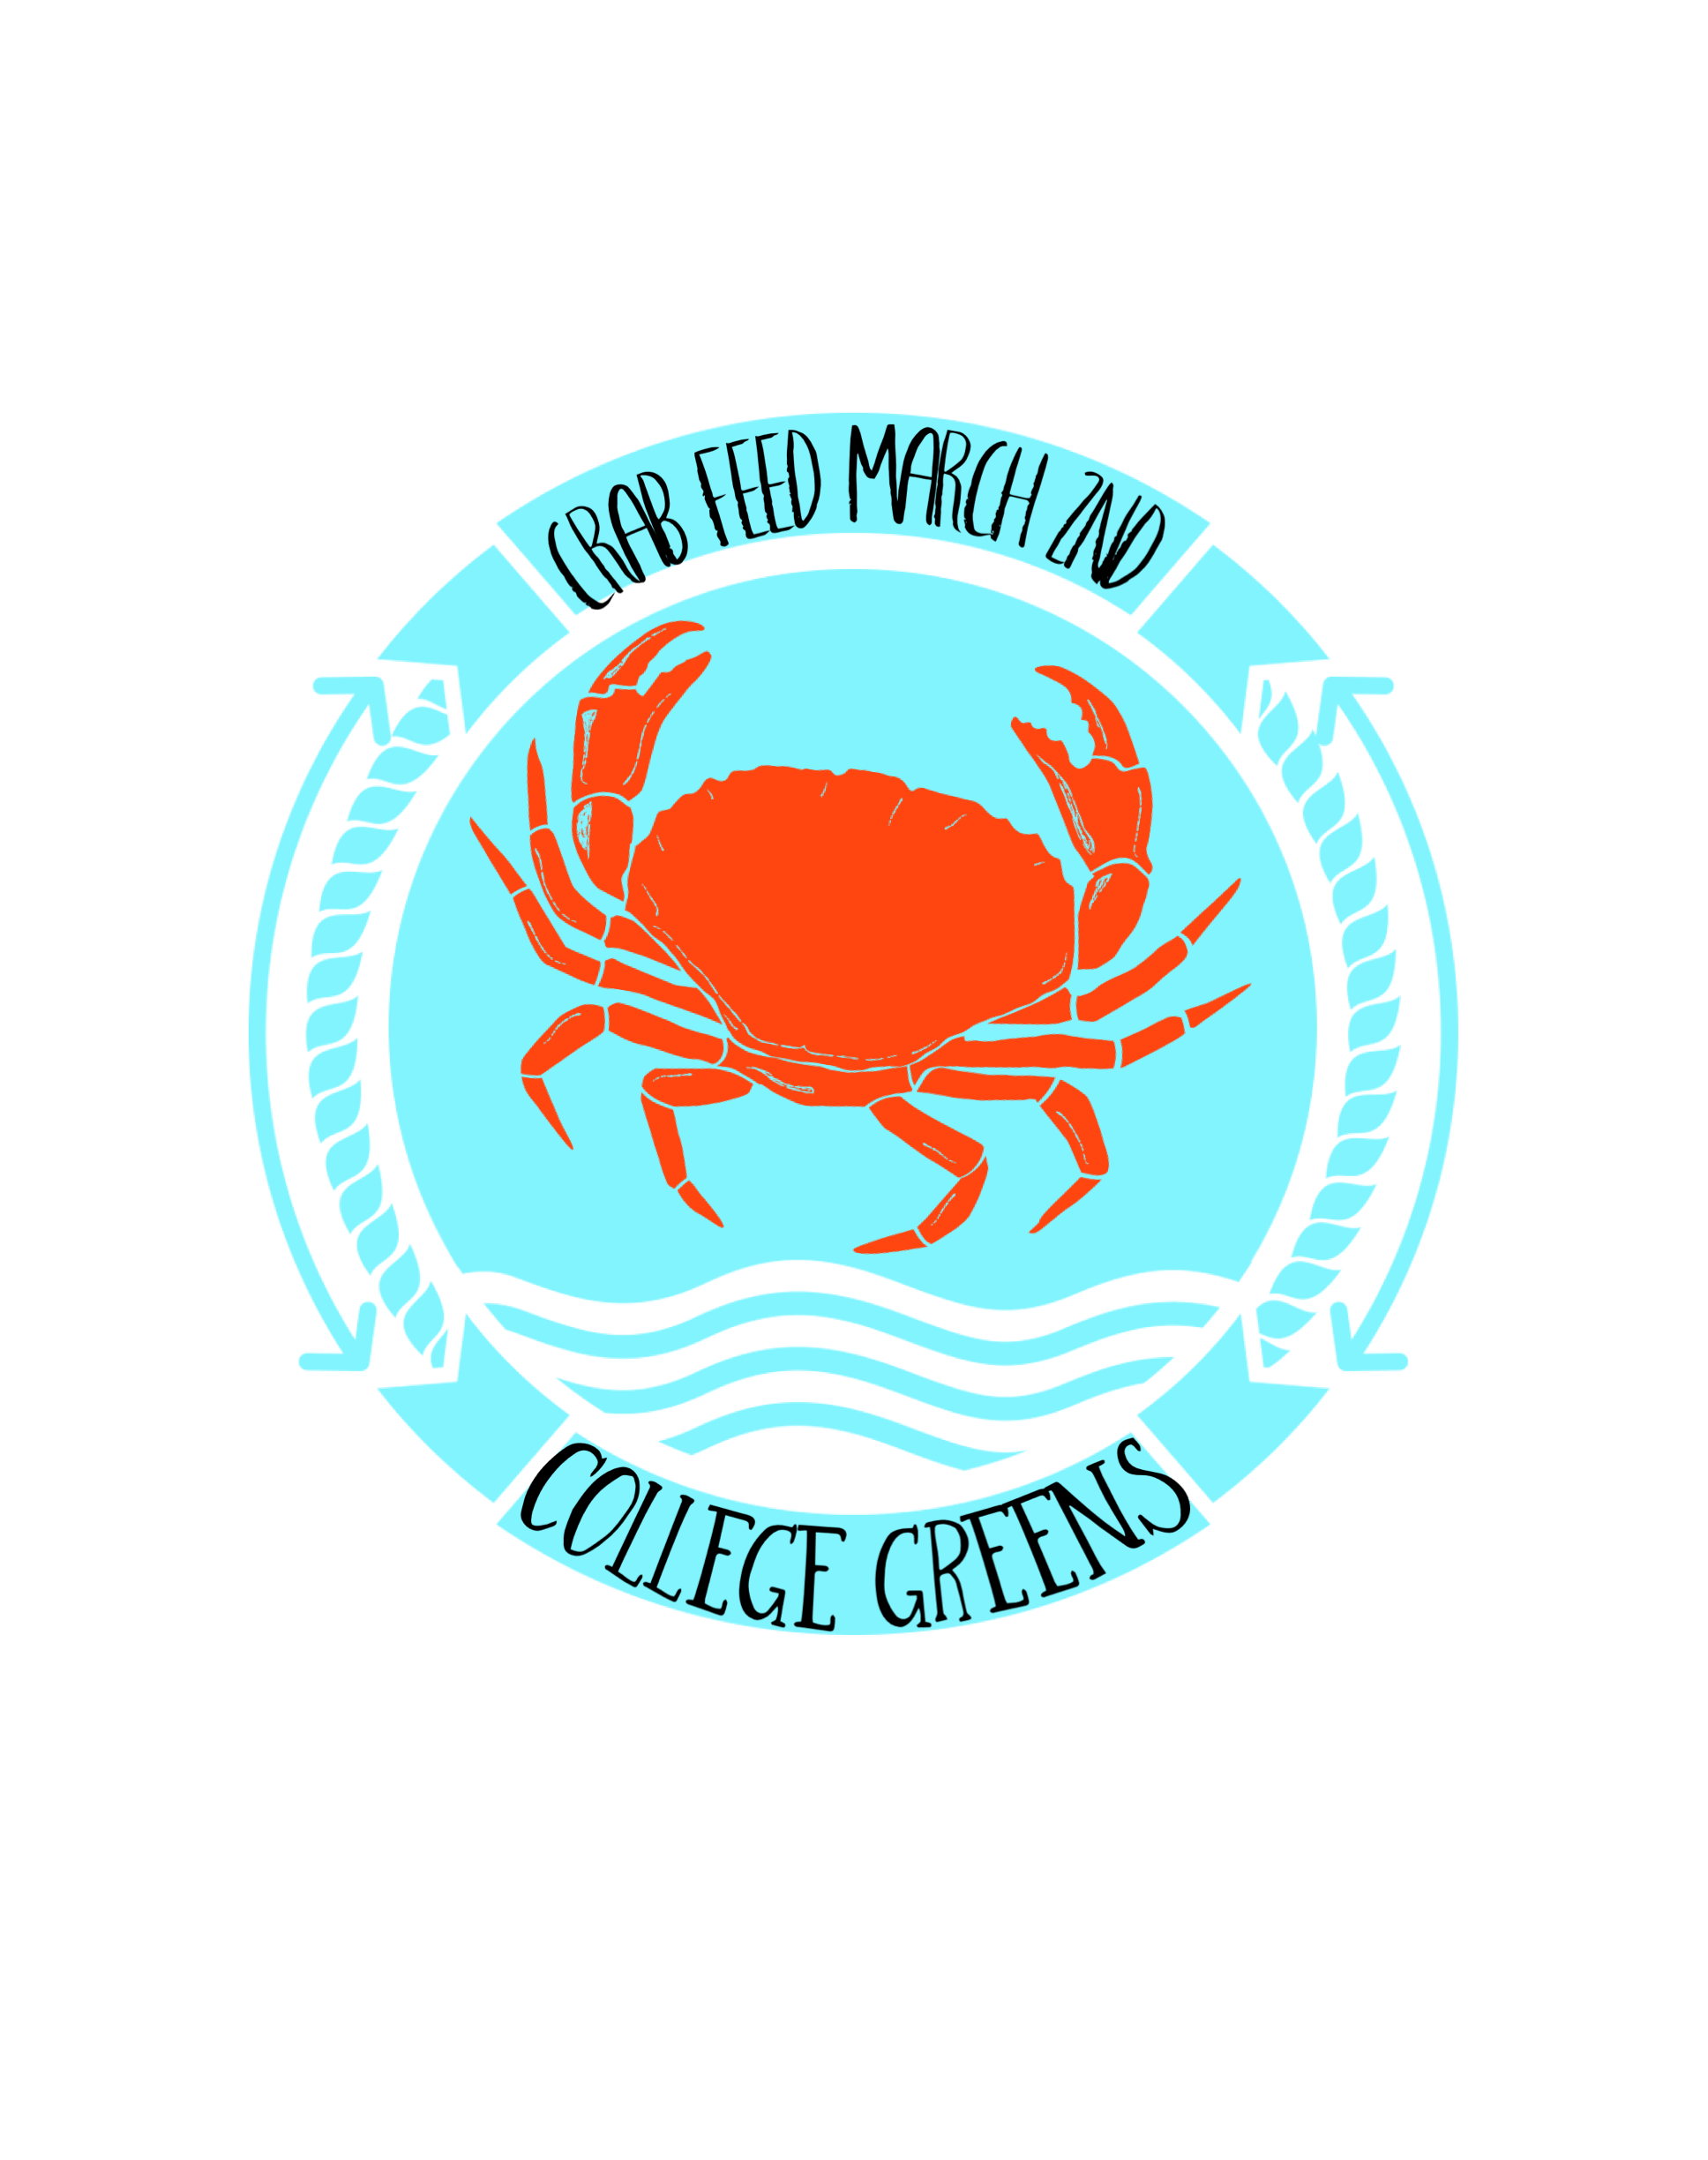 College Greens Logo - College Greens Cabana Club Crab Feed 2019 presented